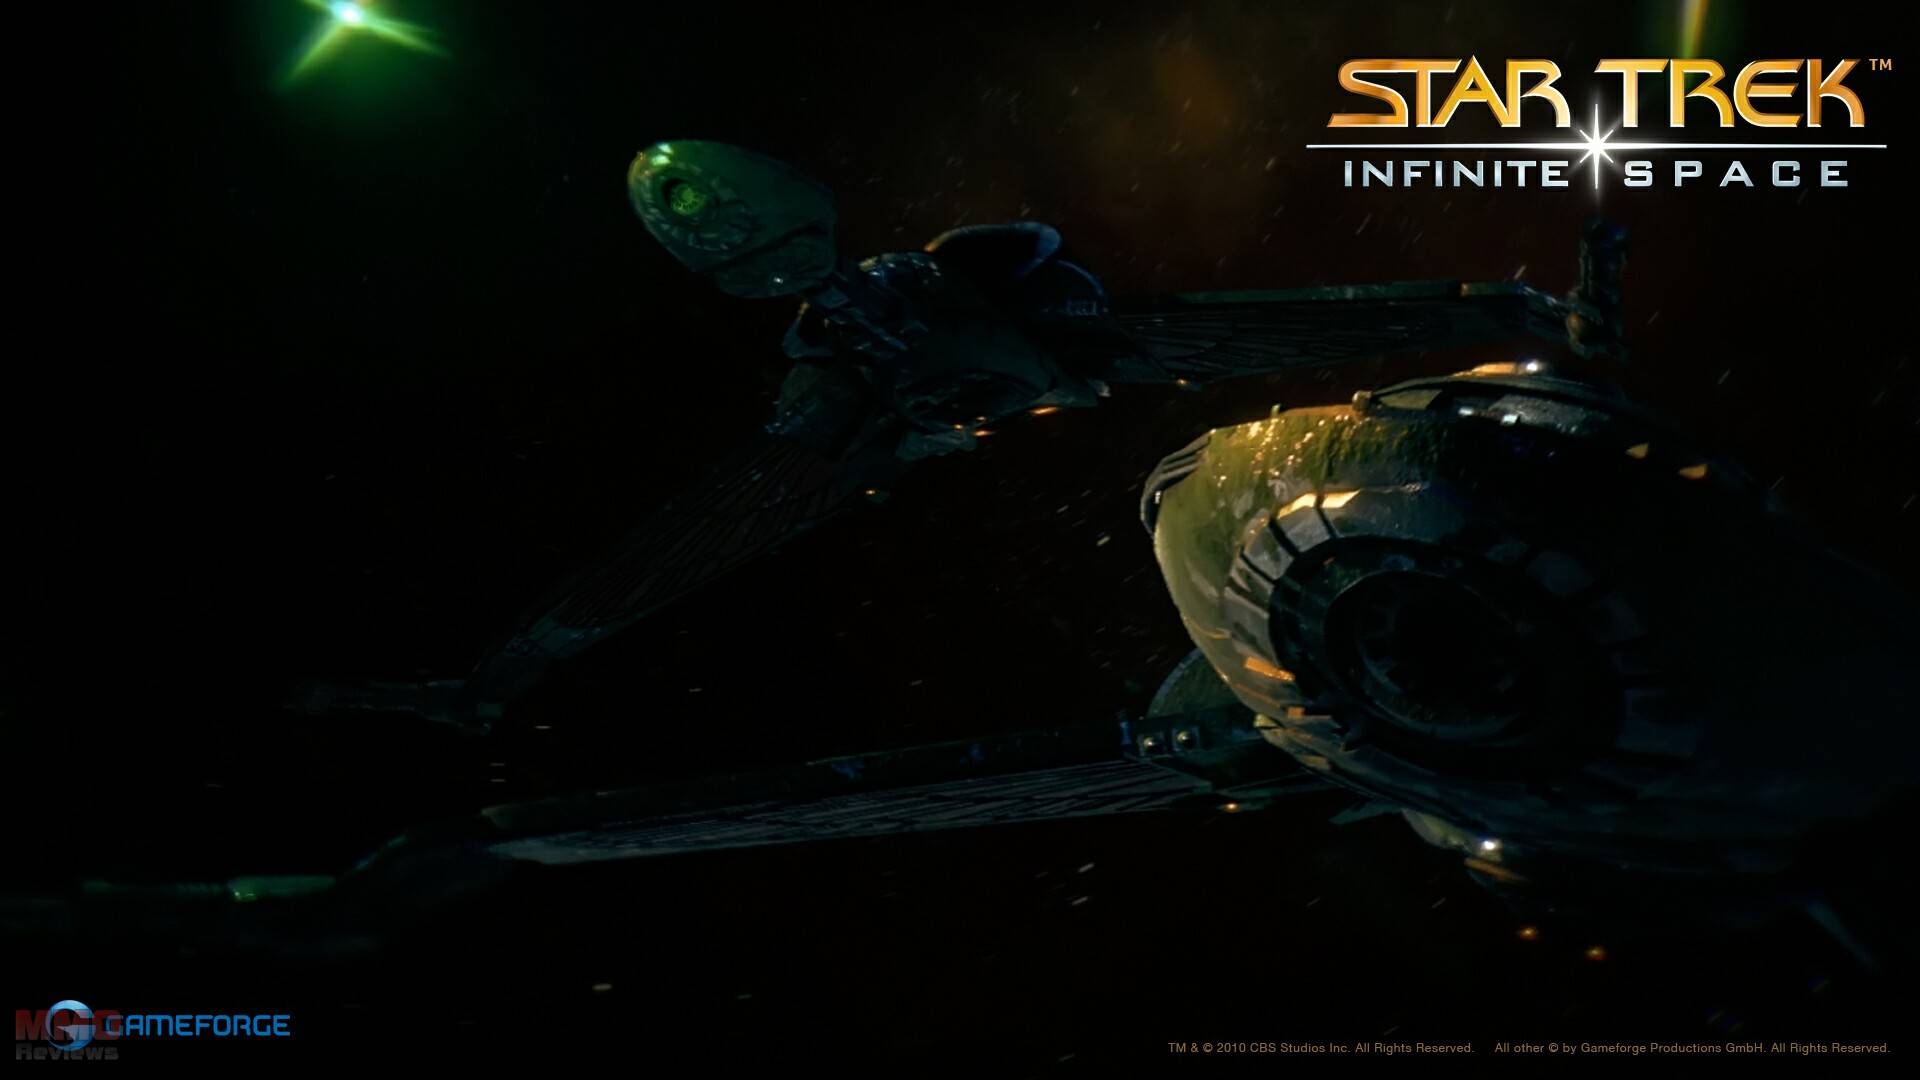 New Full HD Wallpaper Of Star Trek Infinite Space